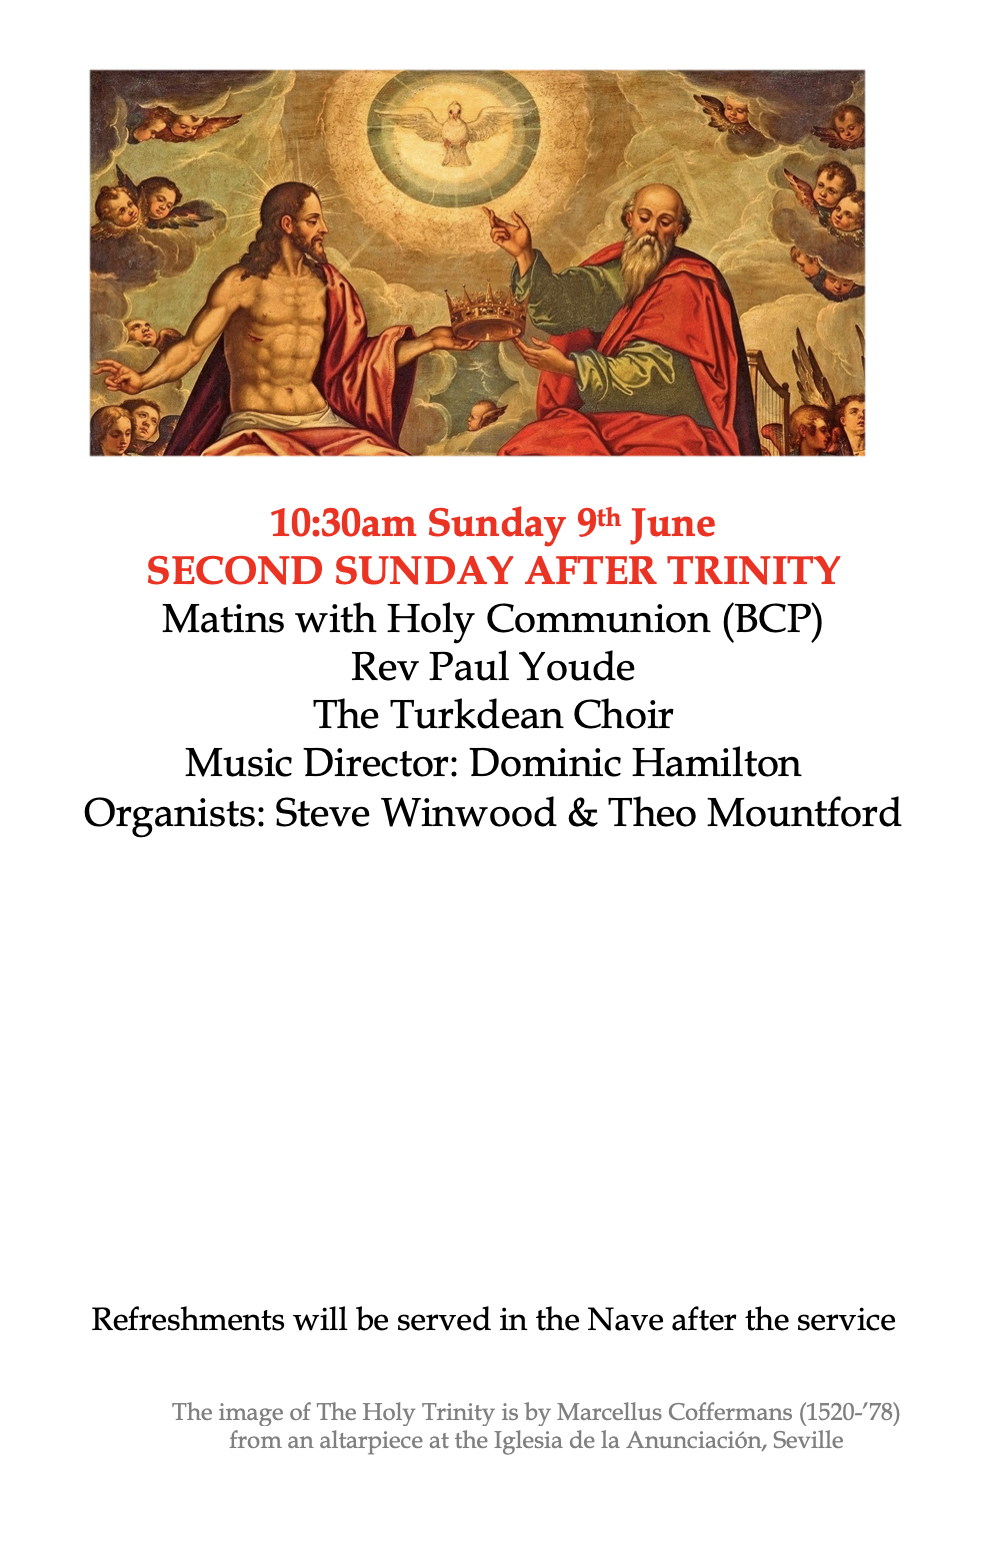 Matins & Holy Communion at All Saints Church Turkdean
10:30am Sunday 9th June